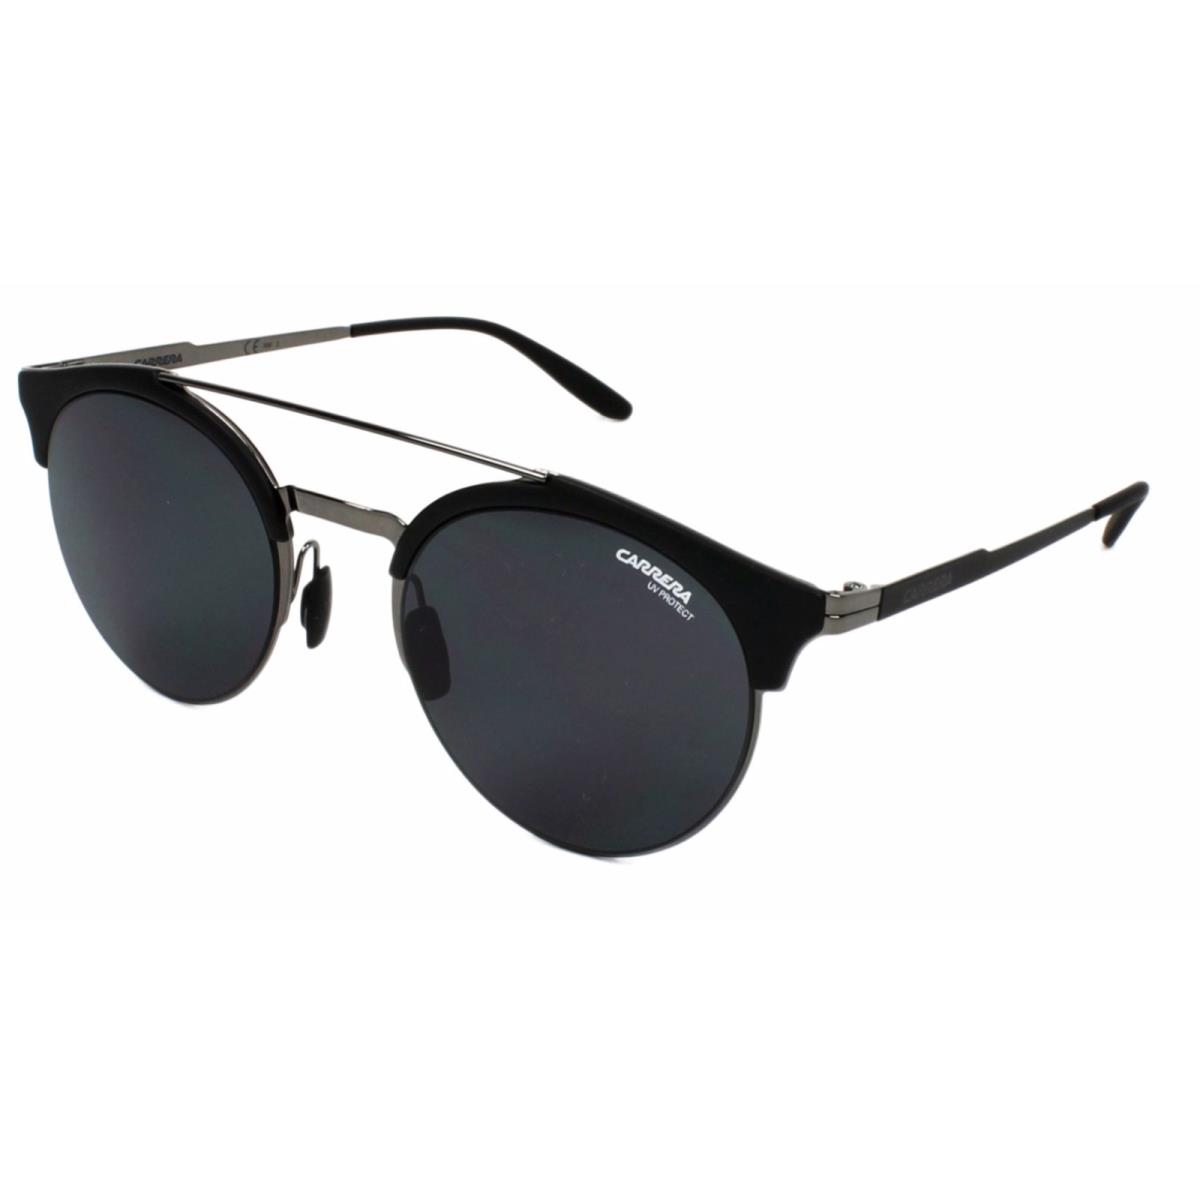 Carrera Sunglasses 141/S KJ1IR Matte Black Black Chrome Frames Grey Lenses - Frame: Matte Black / Black Chrome / Ruthenium, Lens: Dark Blue Grey